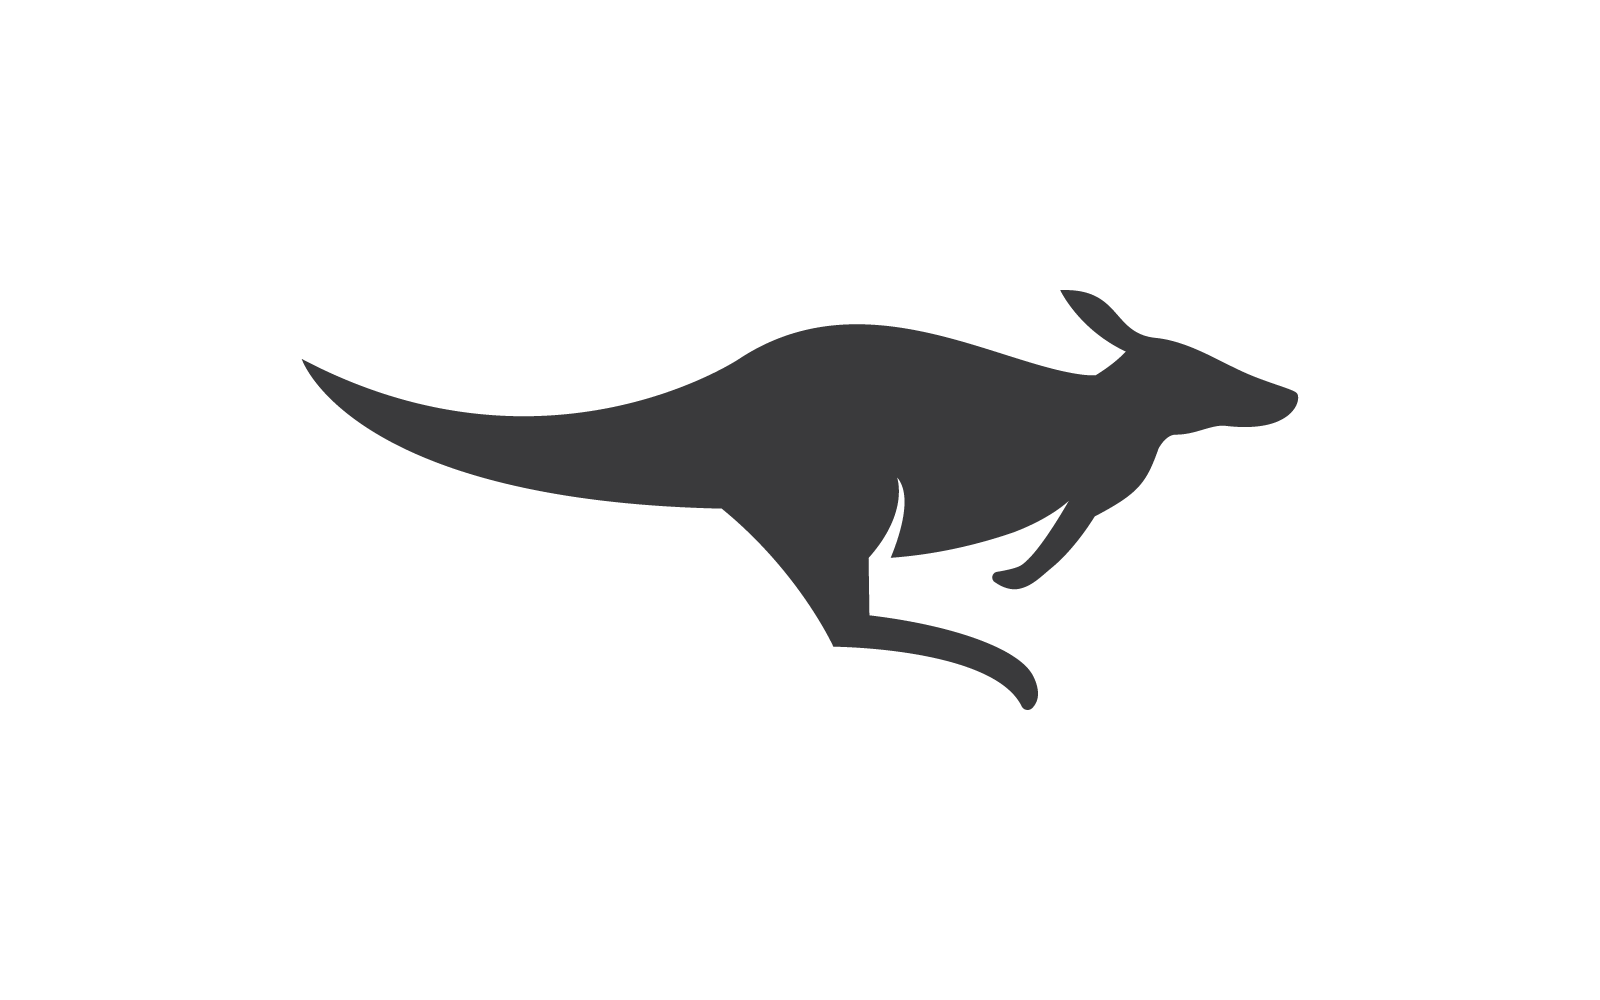 Standing Kangaroo illustration logo template vector design